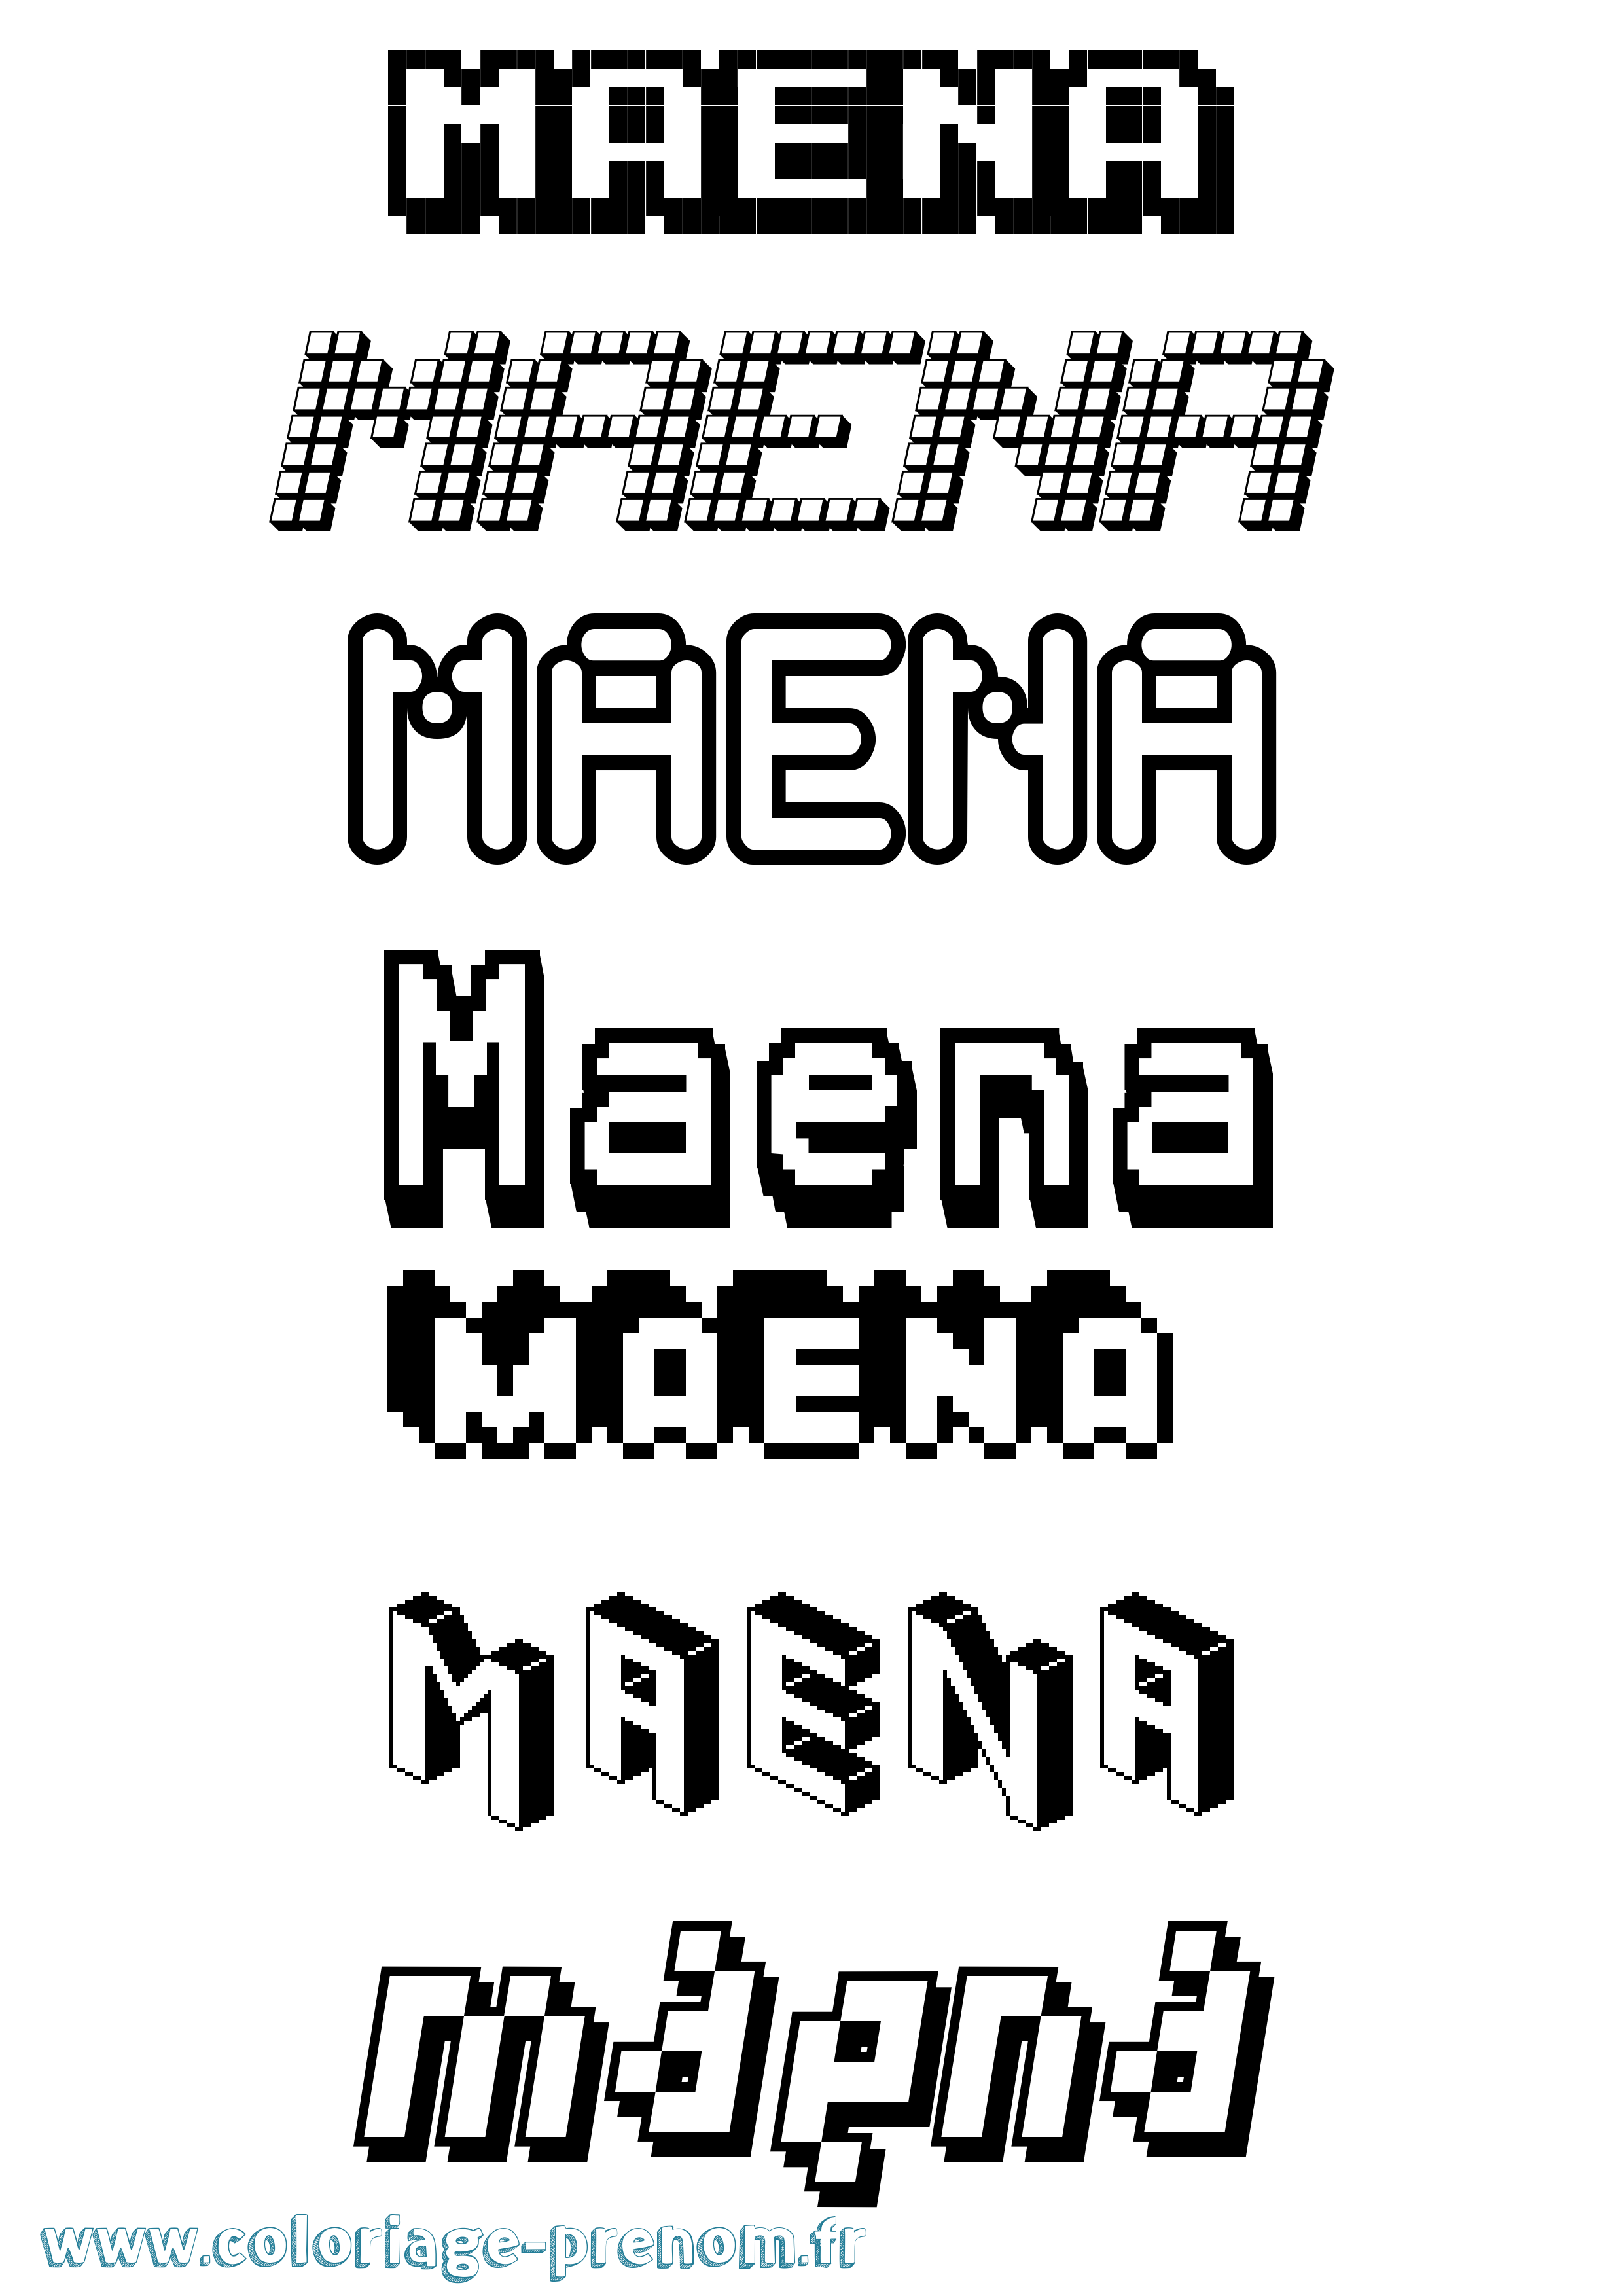 Coloriage prénom Maena Pixel